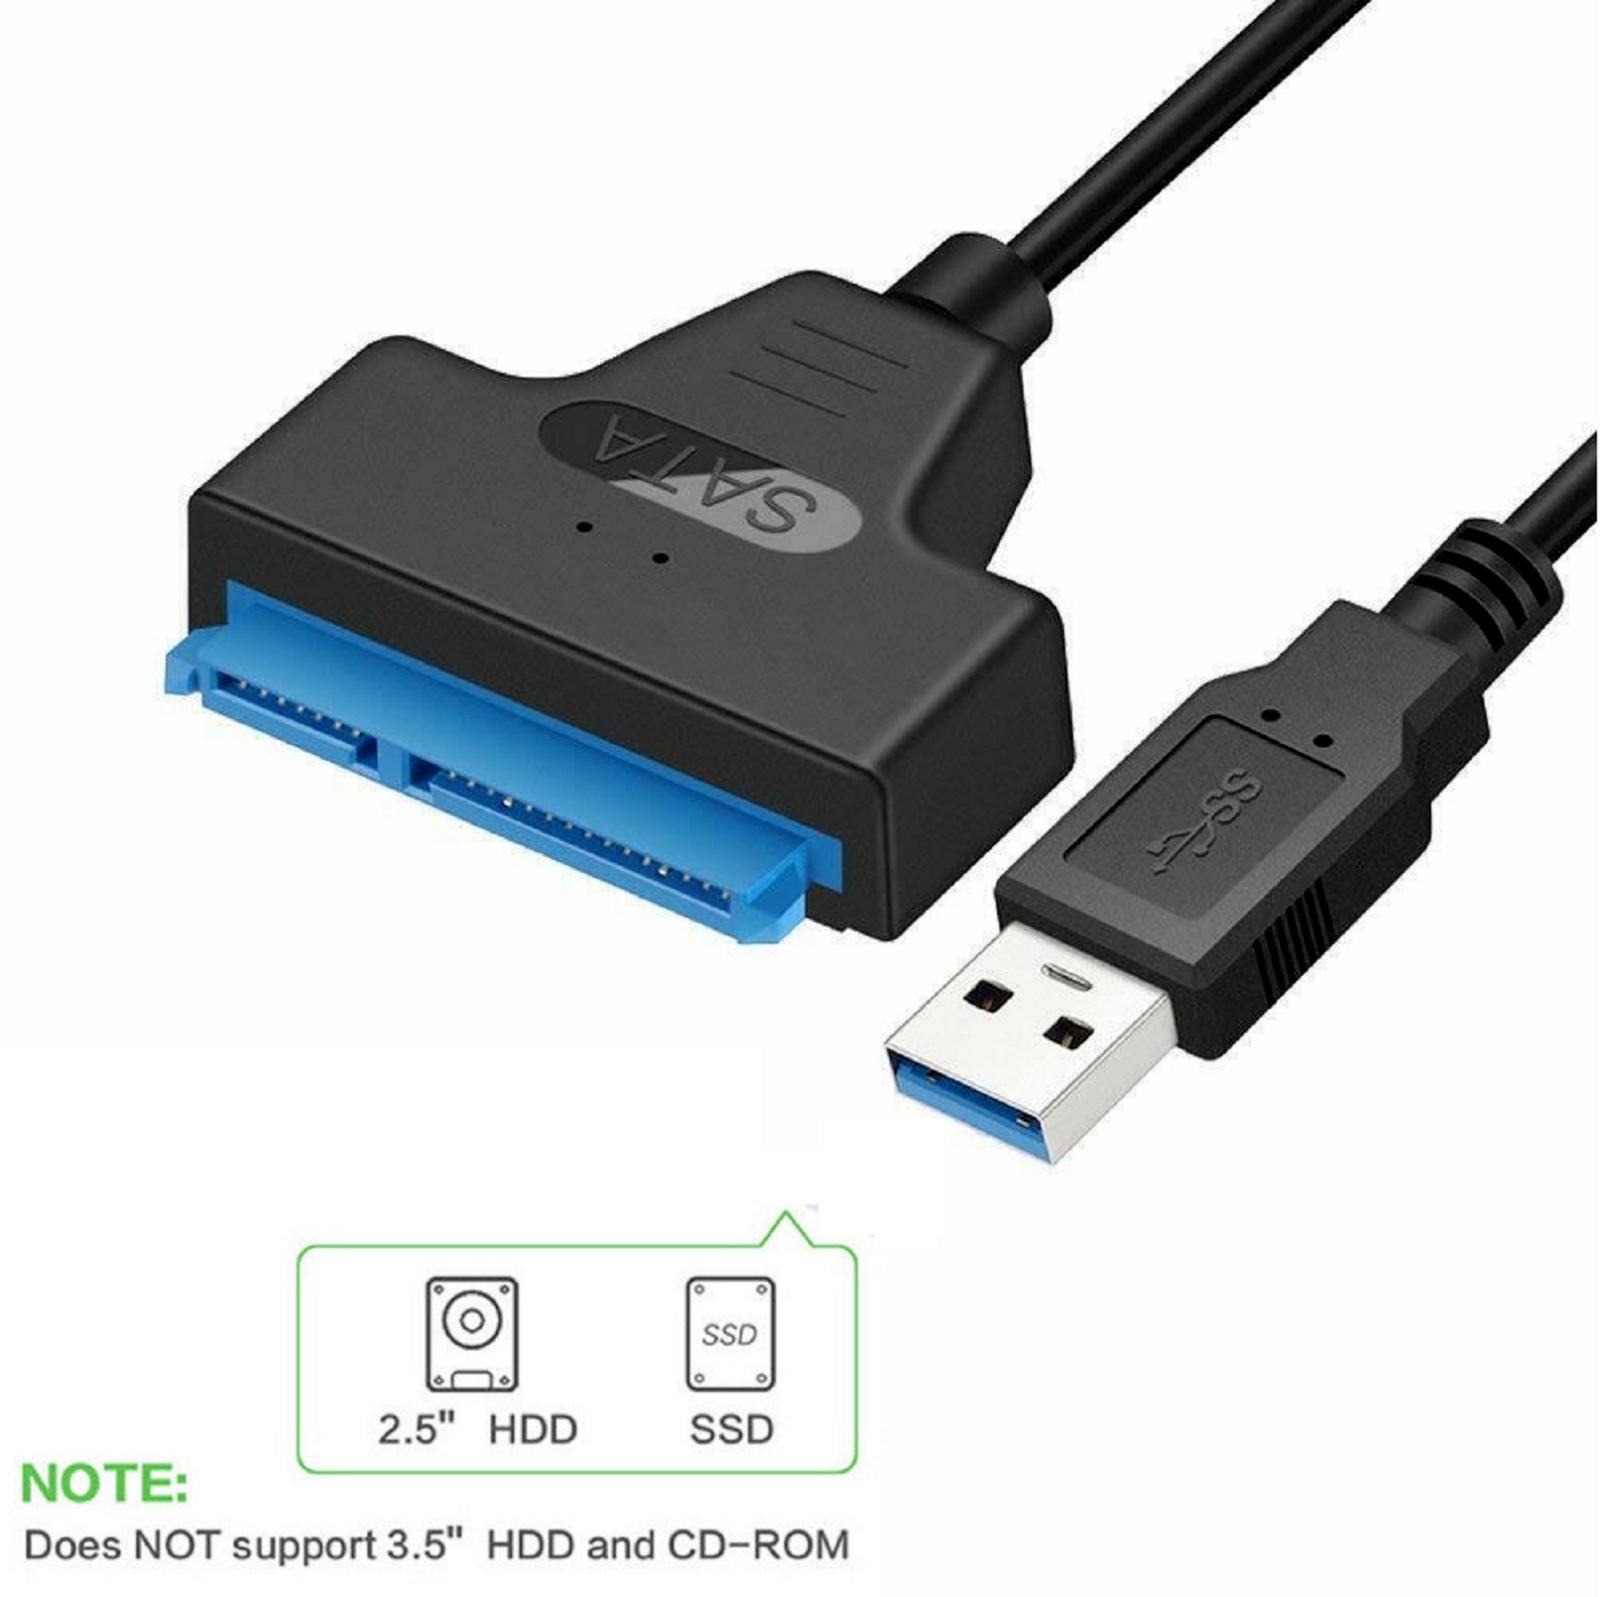 10 X USB 3.0 to 2.5 SATA III Hard Drive Adapter UASP SATA to USB3.0 Converter